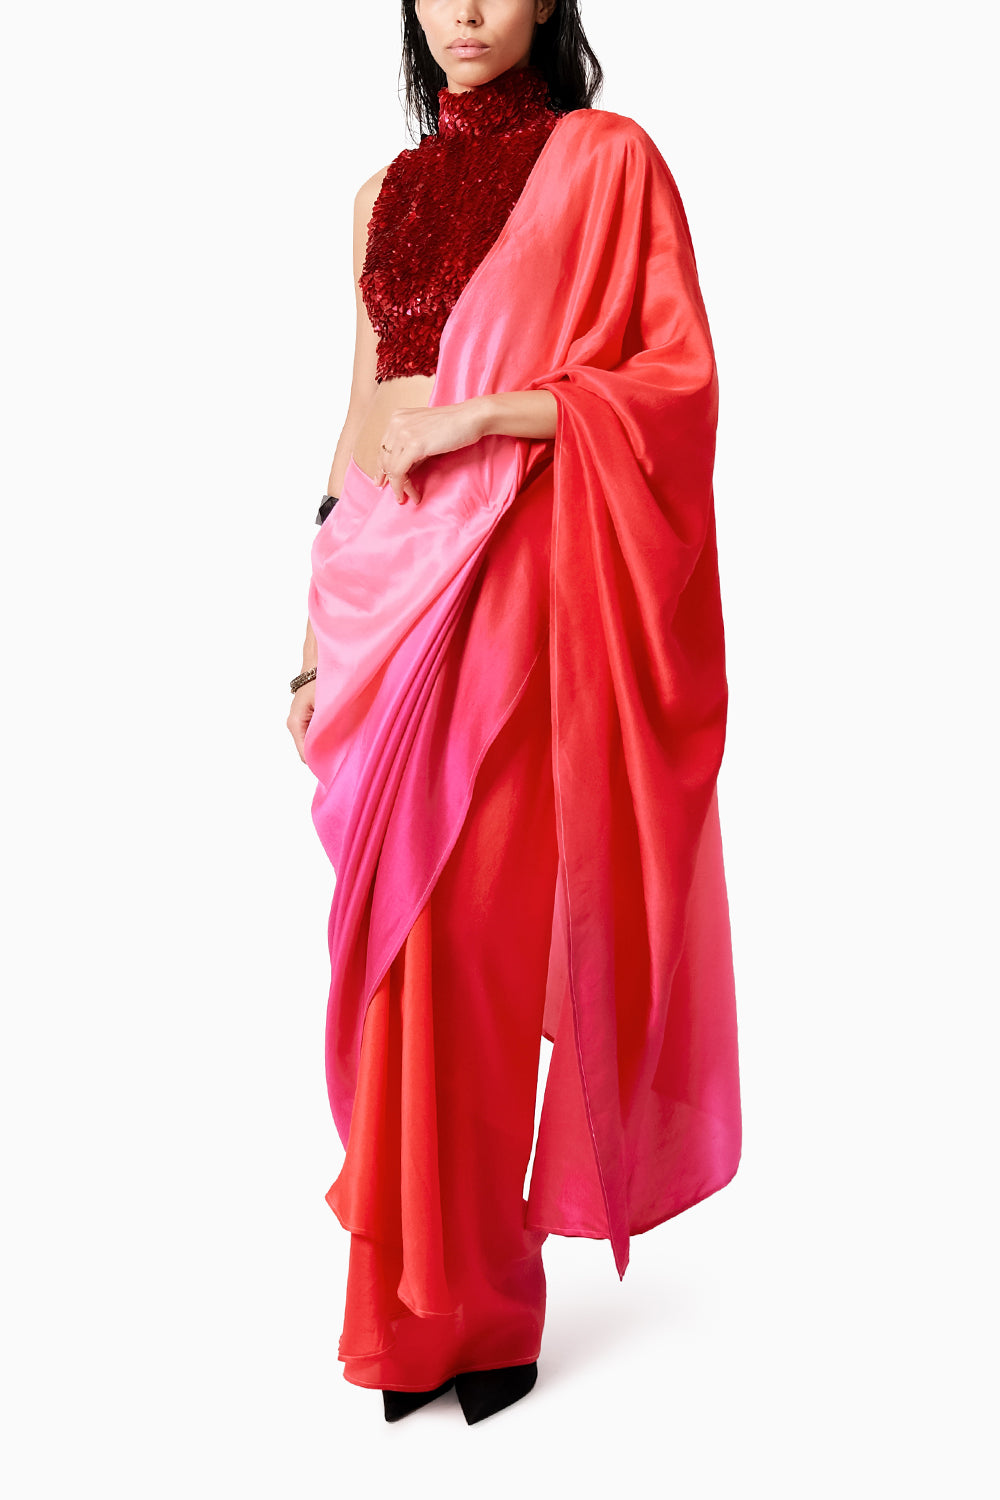 Tasha Top with Ombre Pink Red Masai Godet Sari